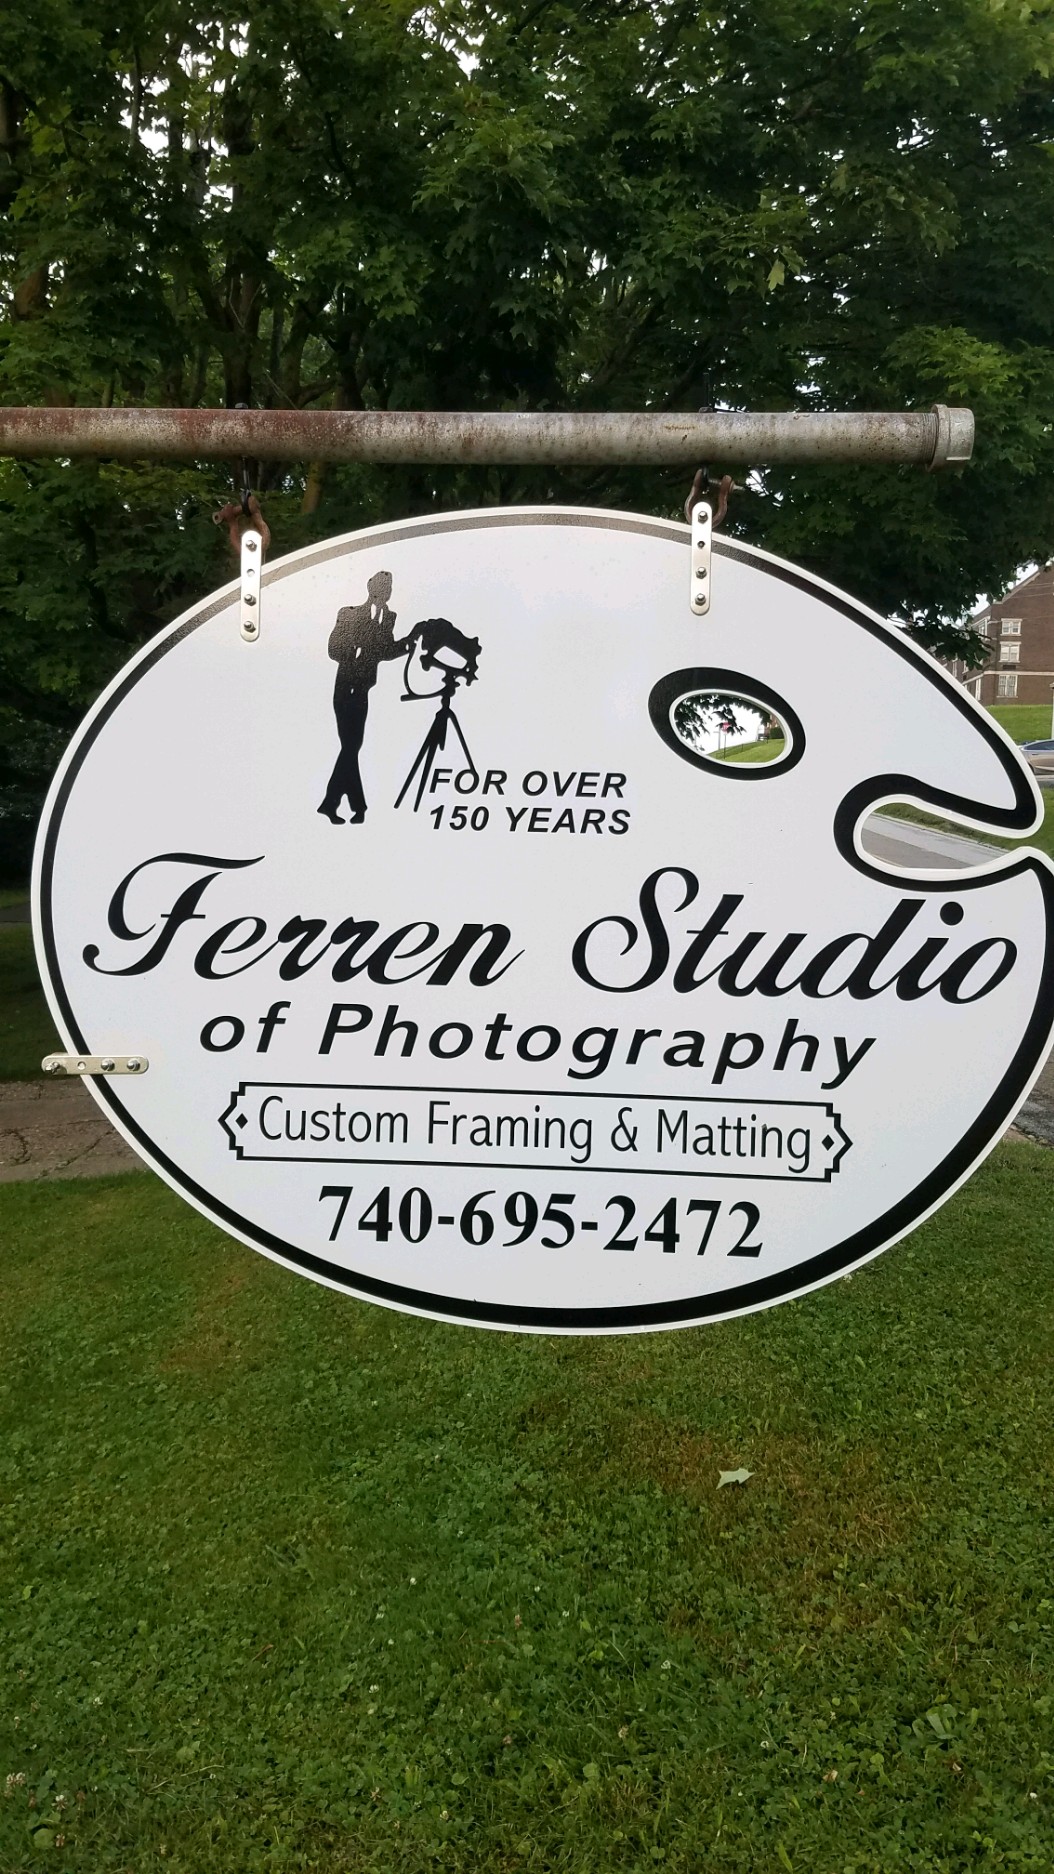 Ferren Studio of Photography, Custom Framing and Matting 141 Newell Ave, St Clairsville Ohio 43950